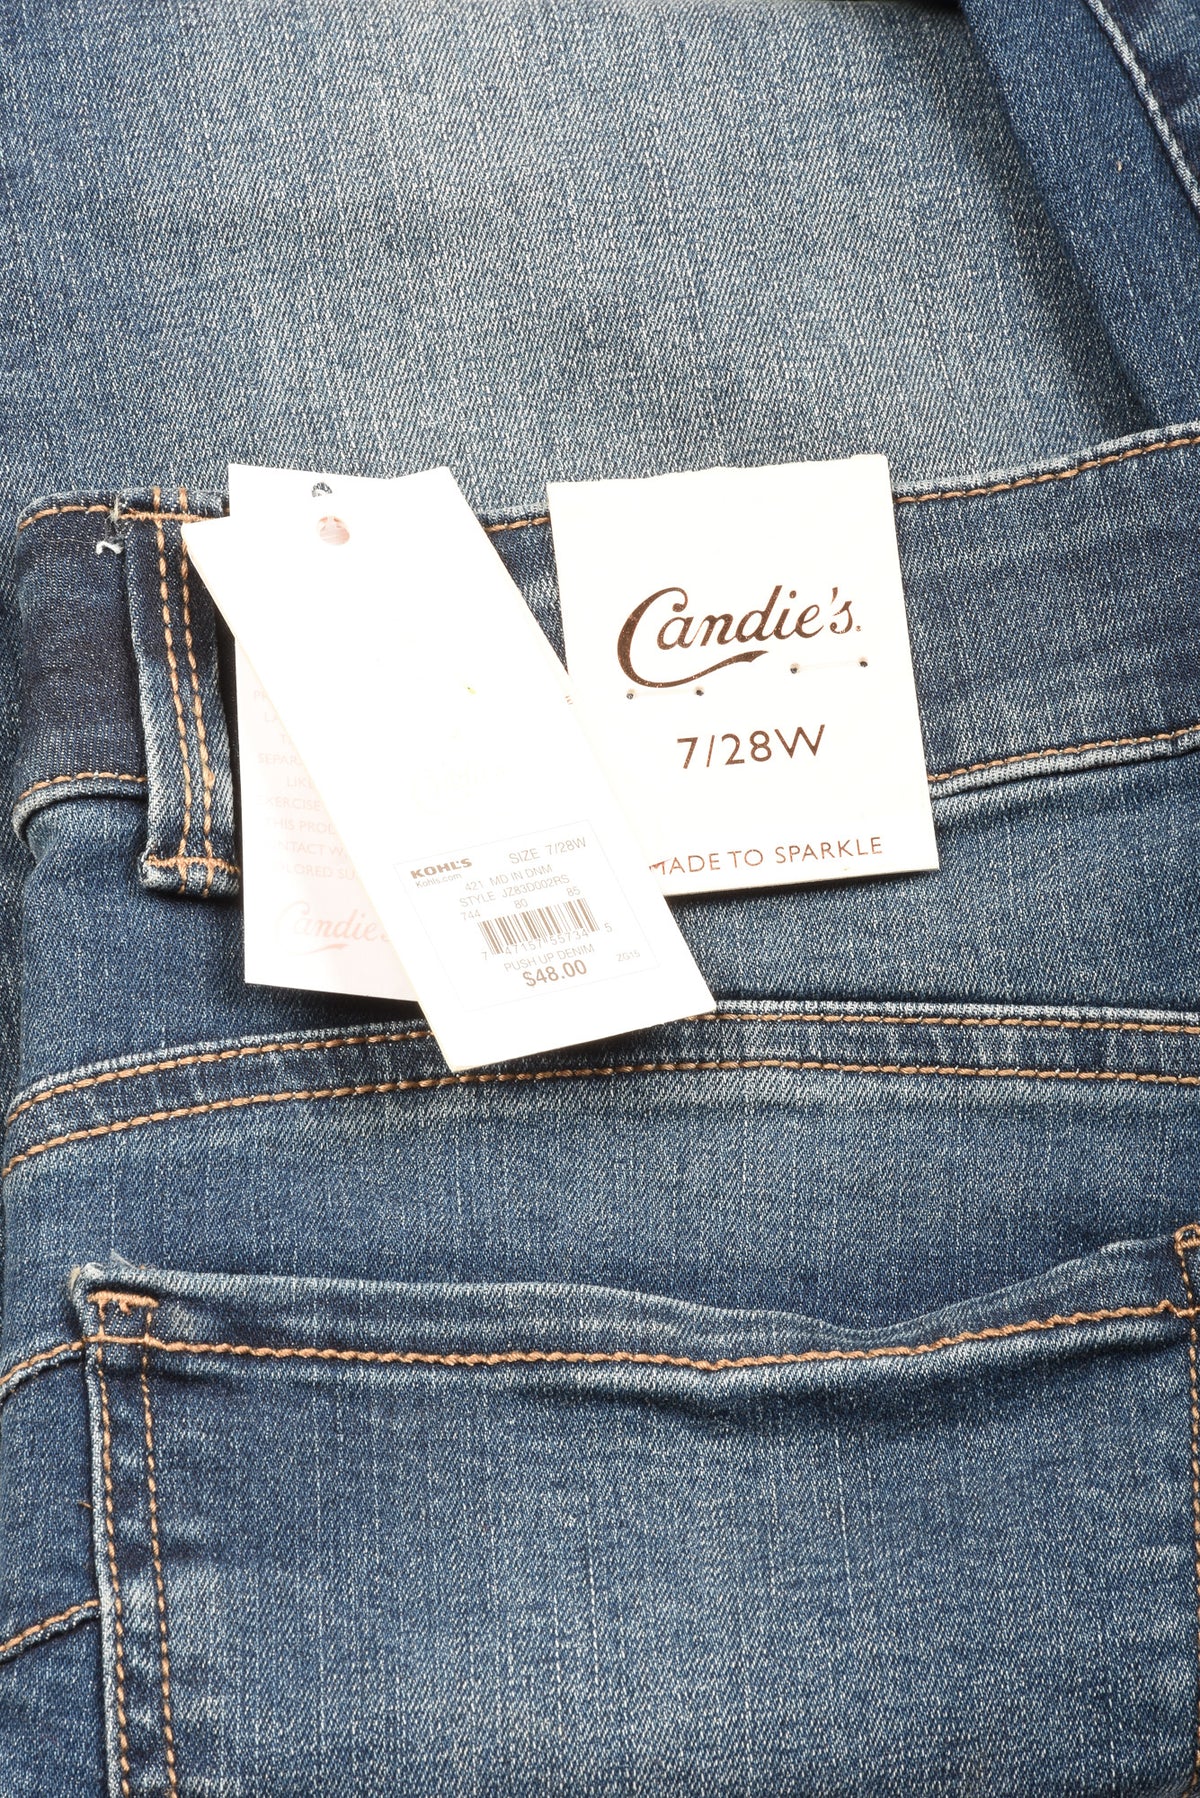 Candie&#39;s Size 7/28W Women&#39;s Jeans